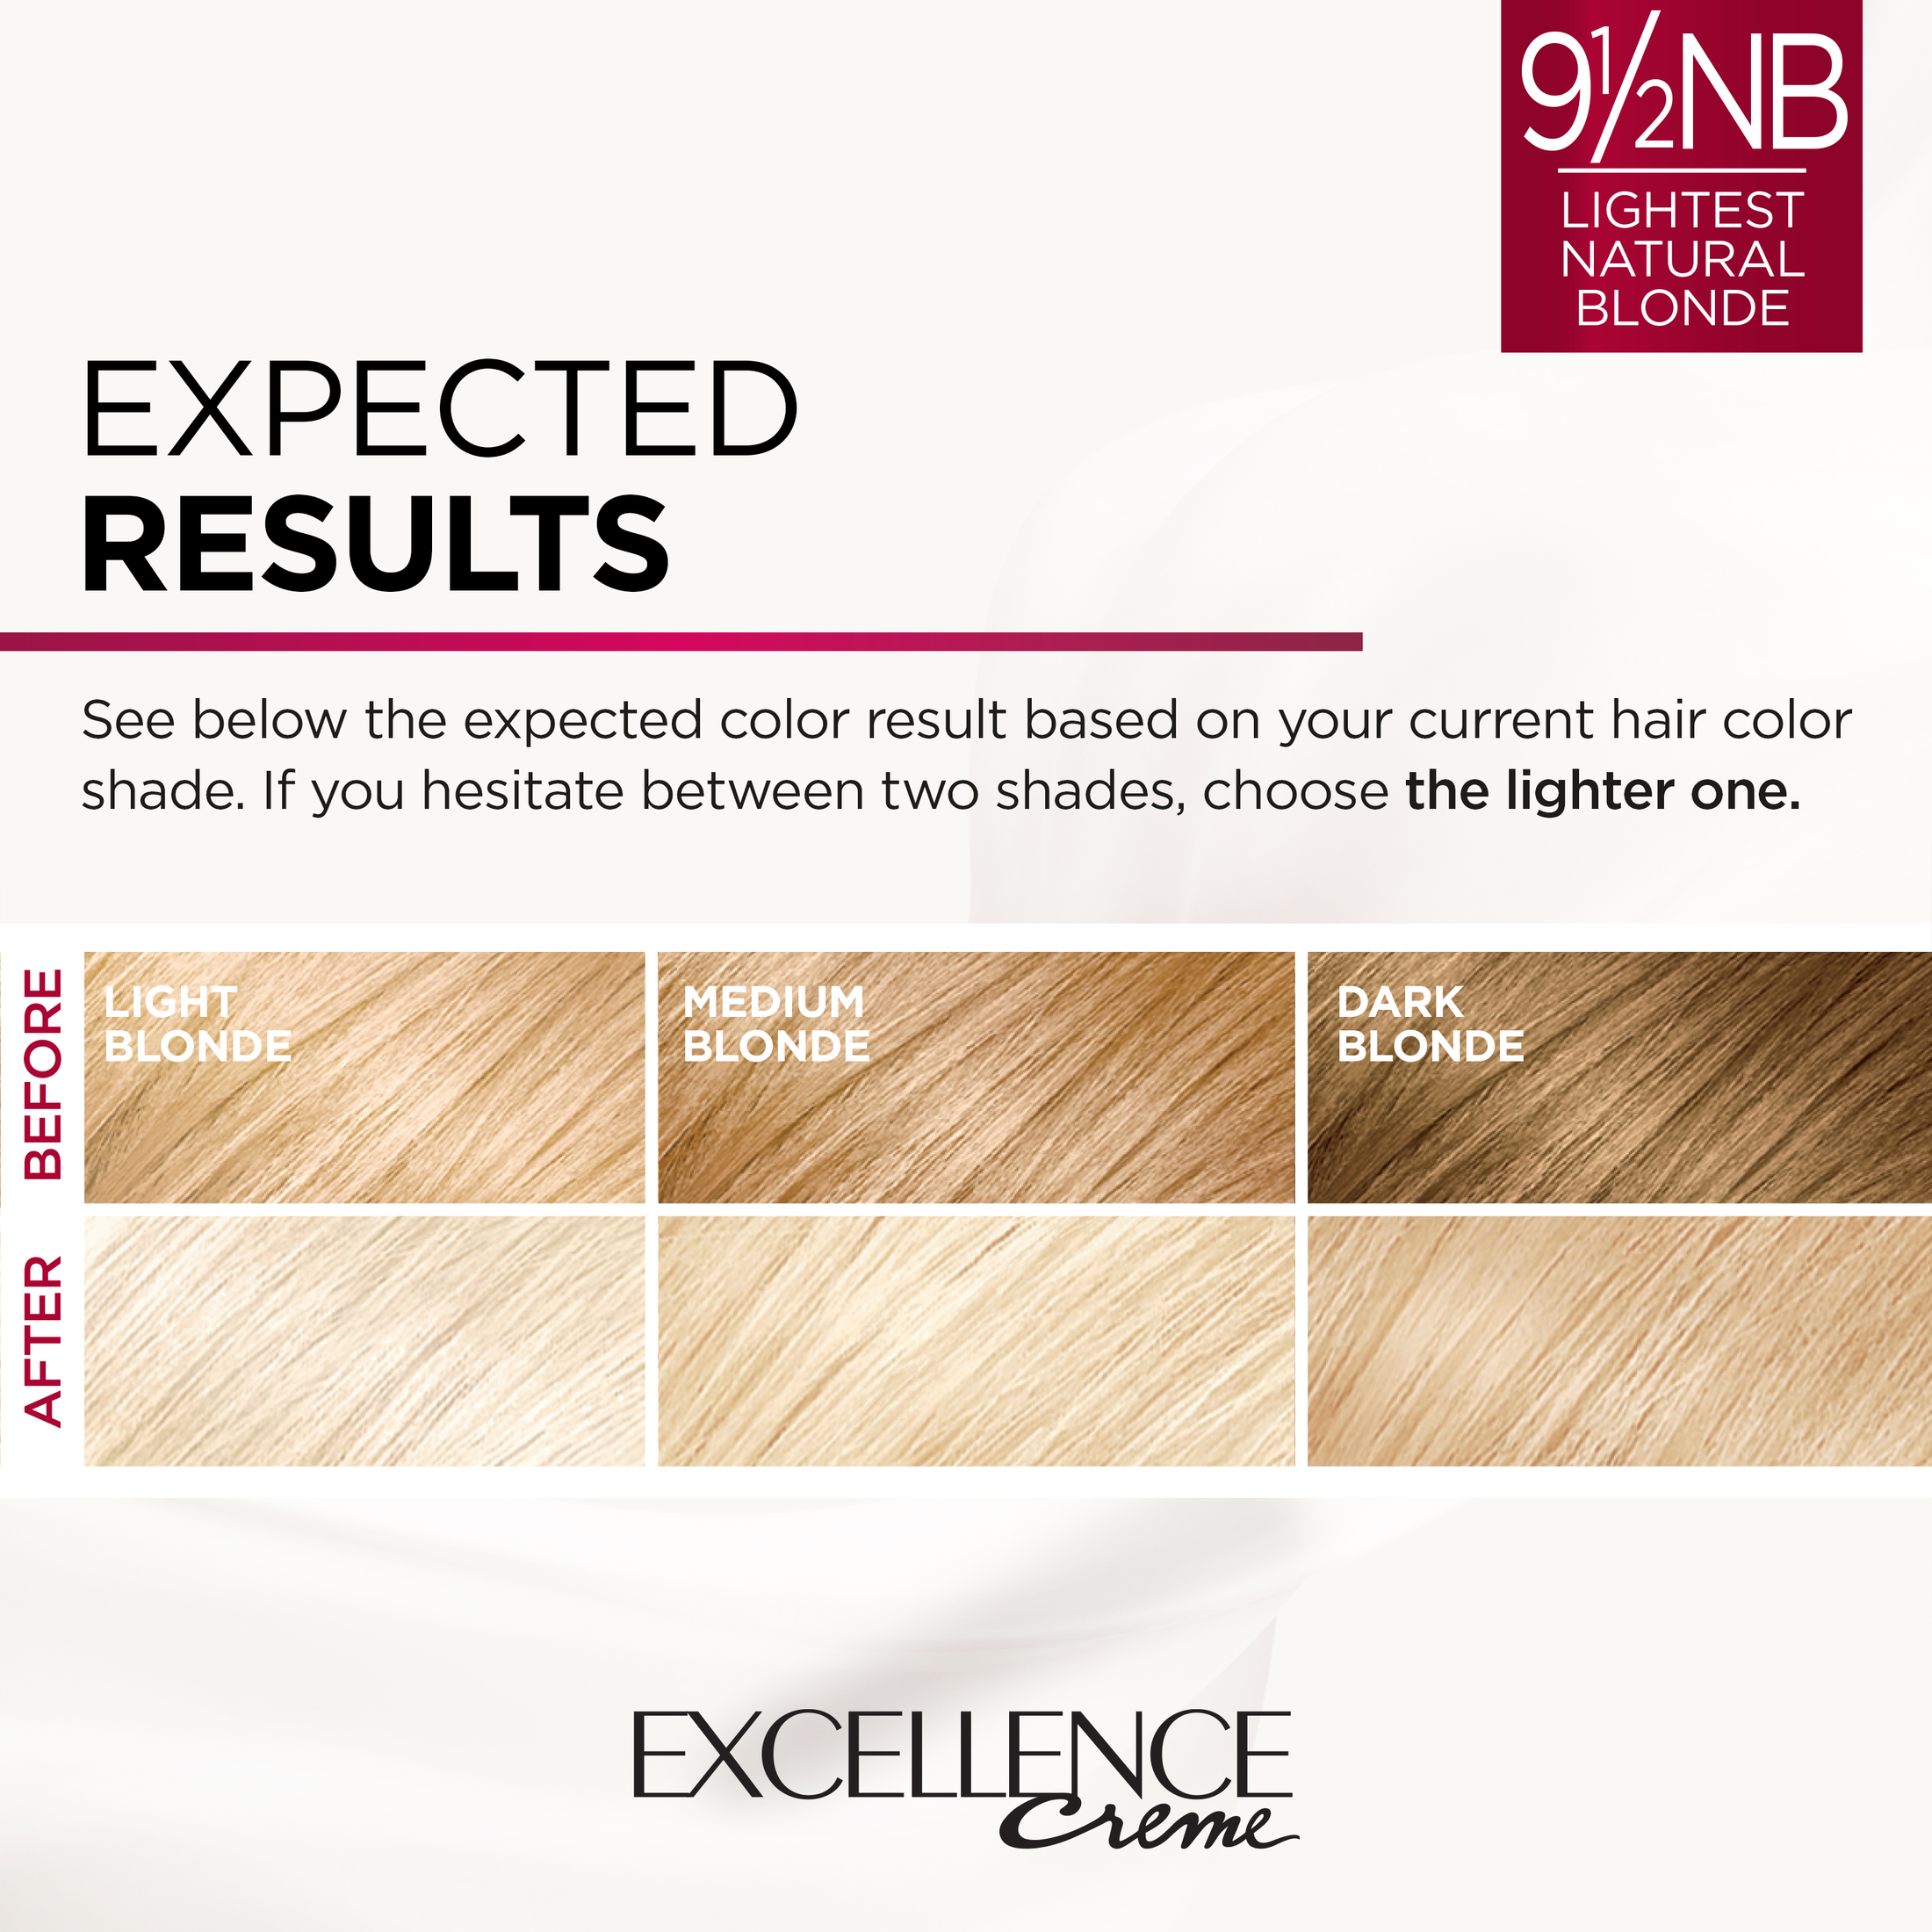 L'Oreal Paris Excellence Creme Permanent Hair Color, 9.5NB Lightest Natural Blonde - image 5 of 8